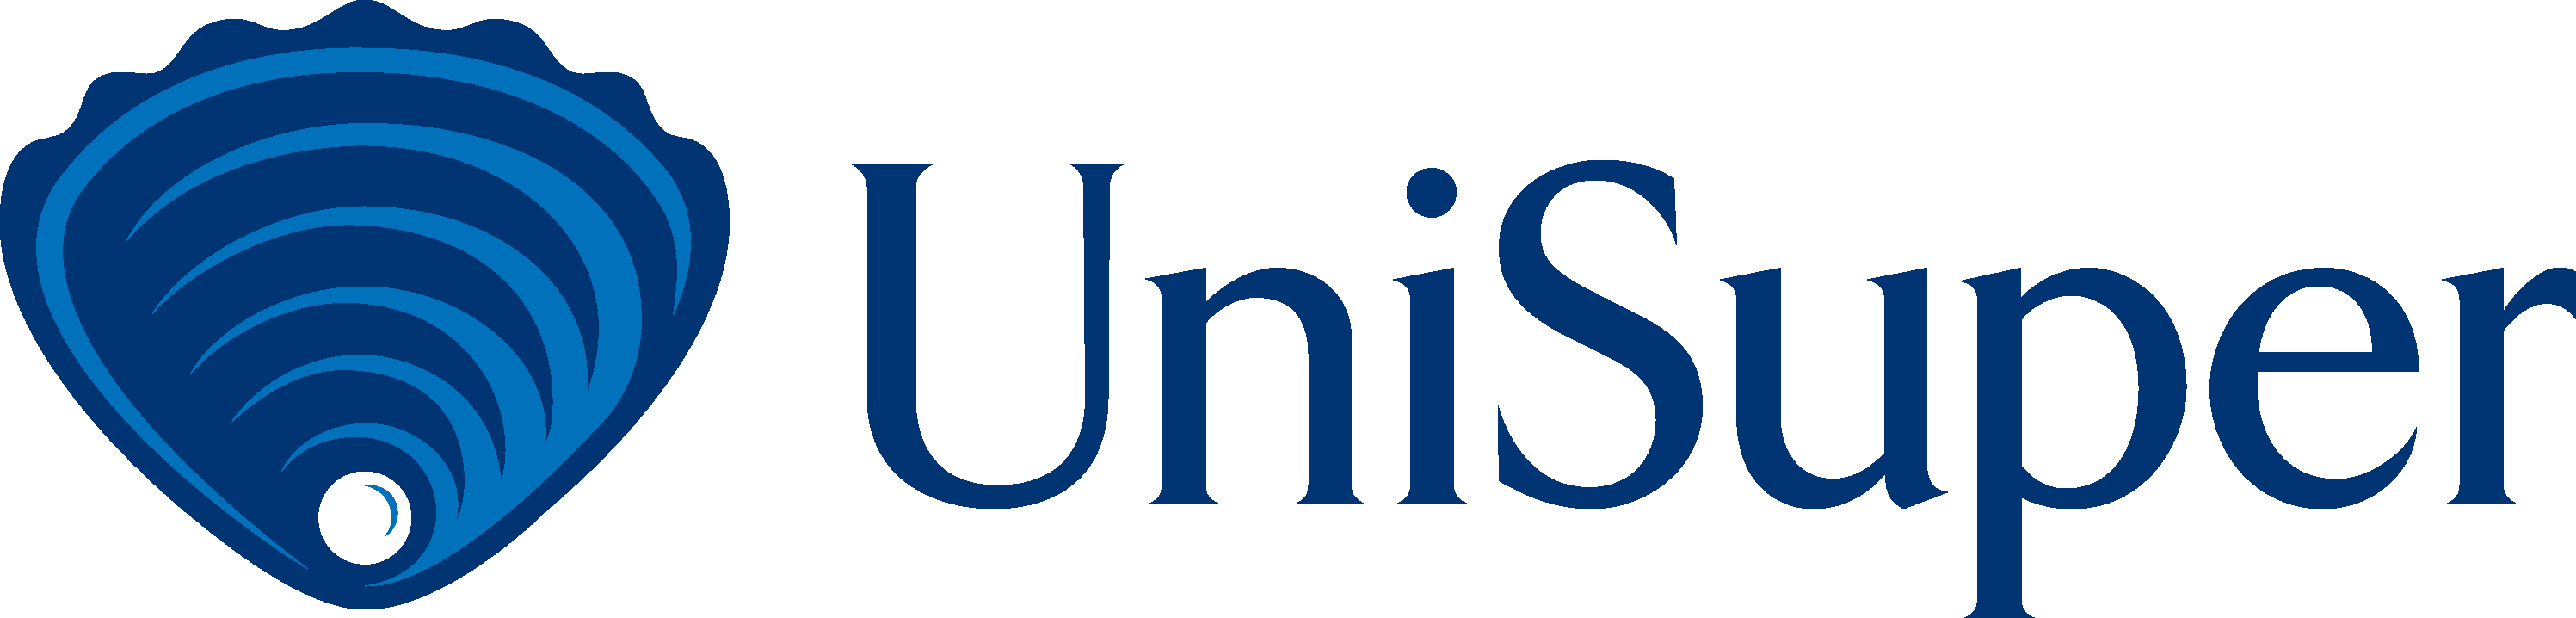 UniSuper Logo png